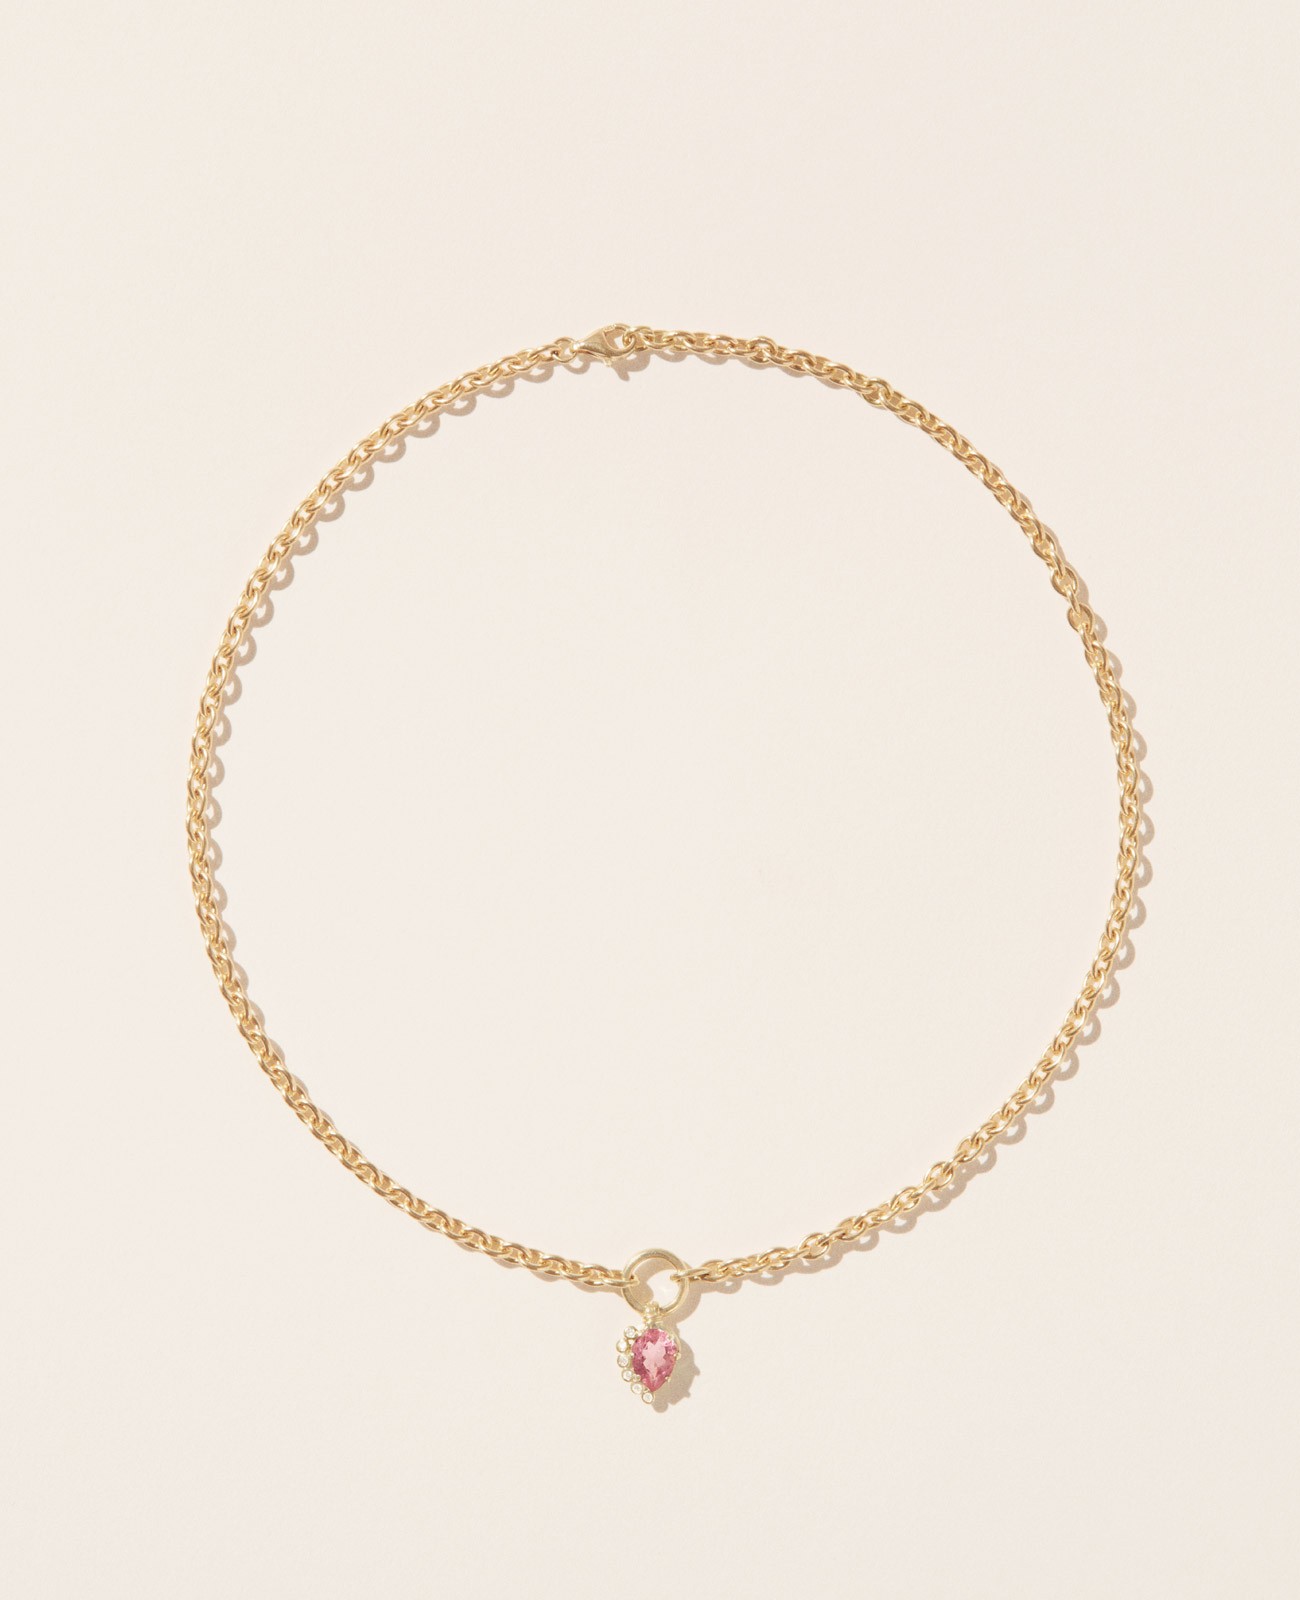 SUN N°1 PINK TOURMALINE necklace pascale monvoisin jewelry paris